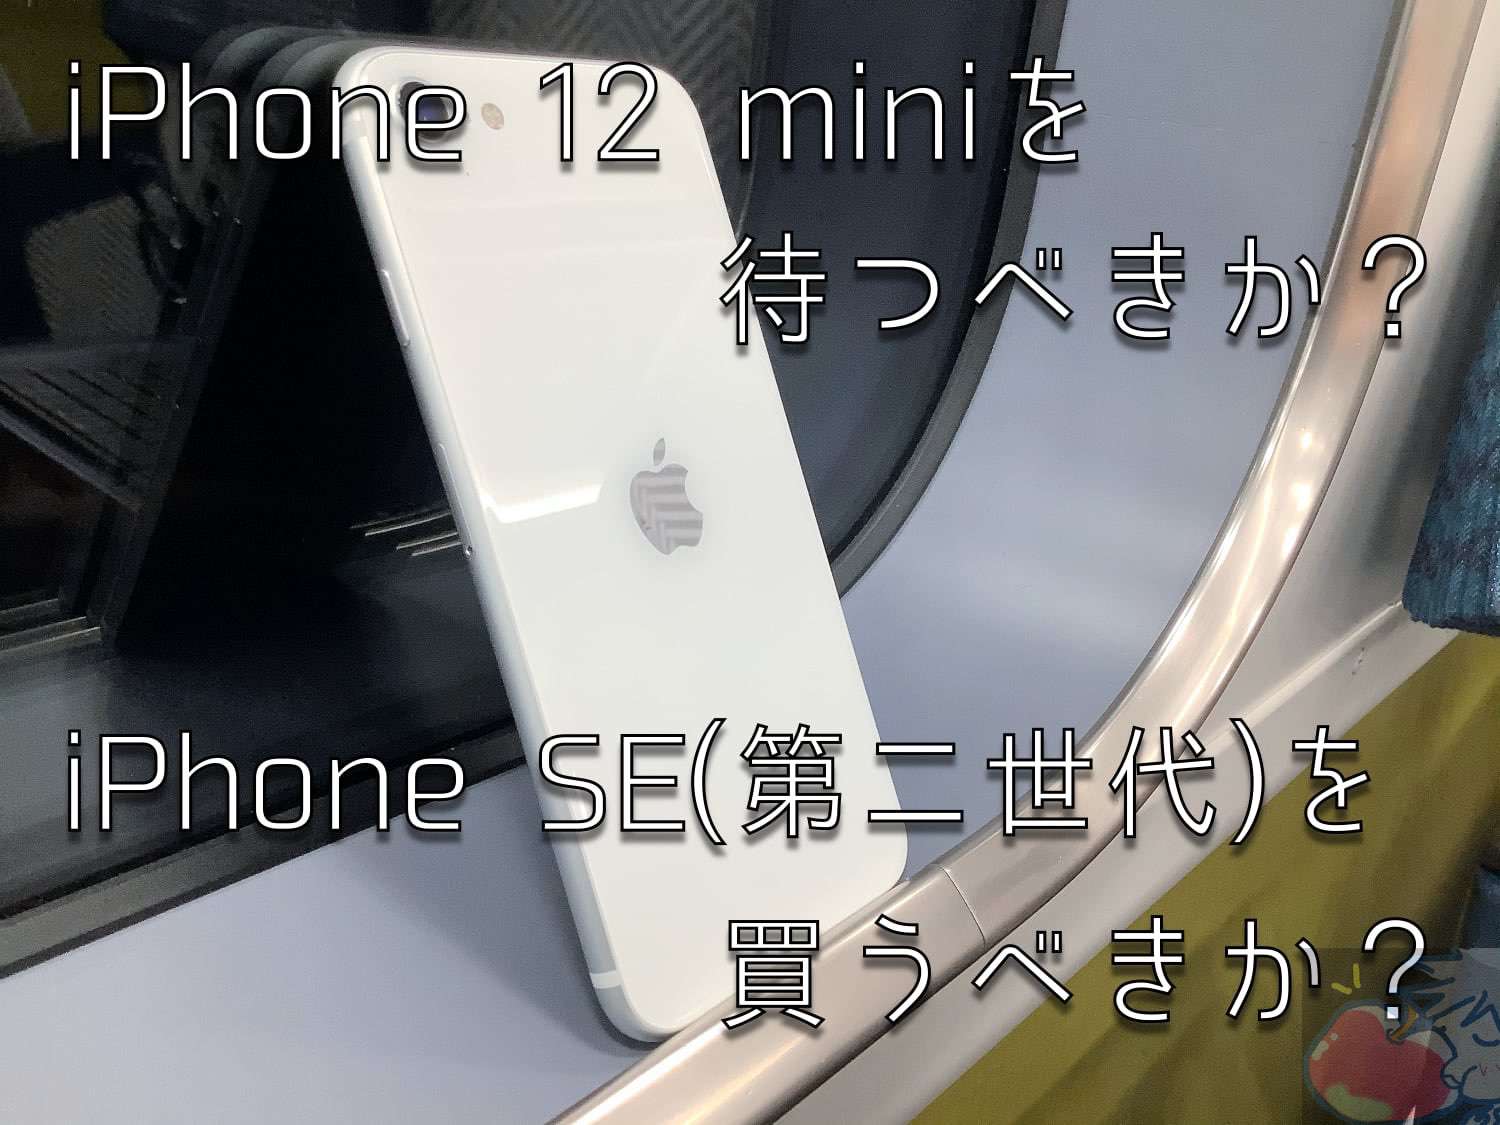 iPhone 12 miniを待つべきか？iPhone SEを買うべきか？